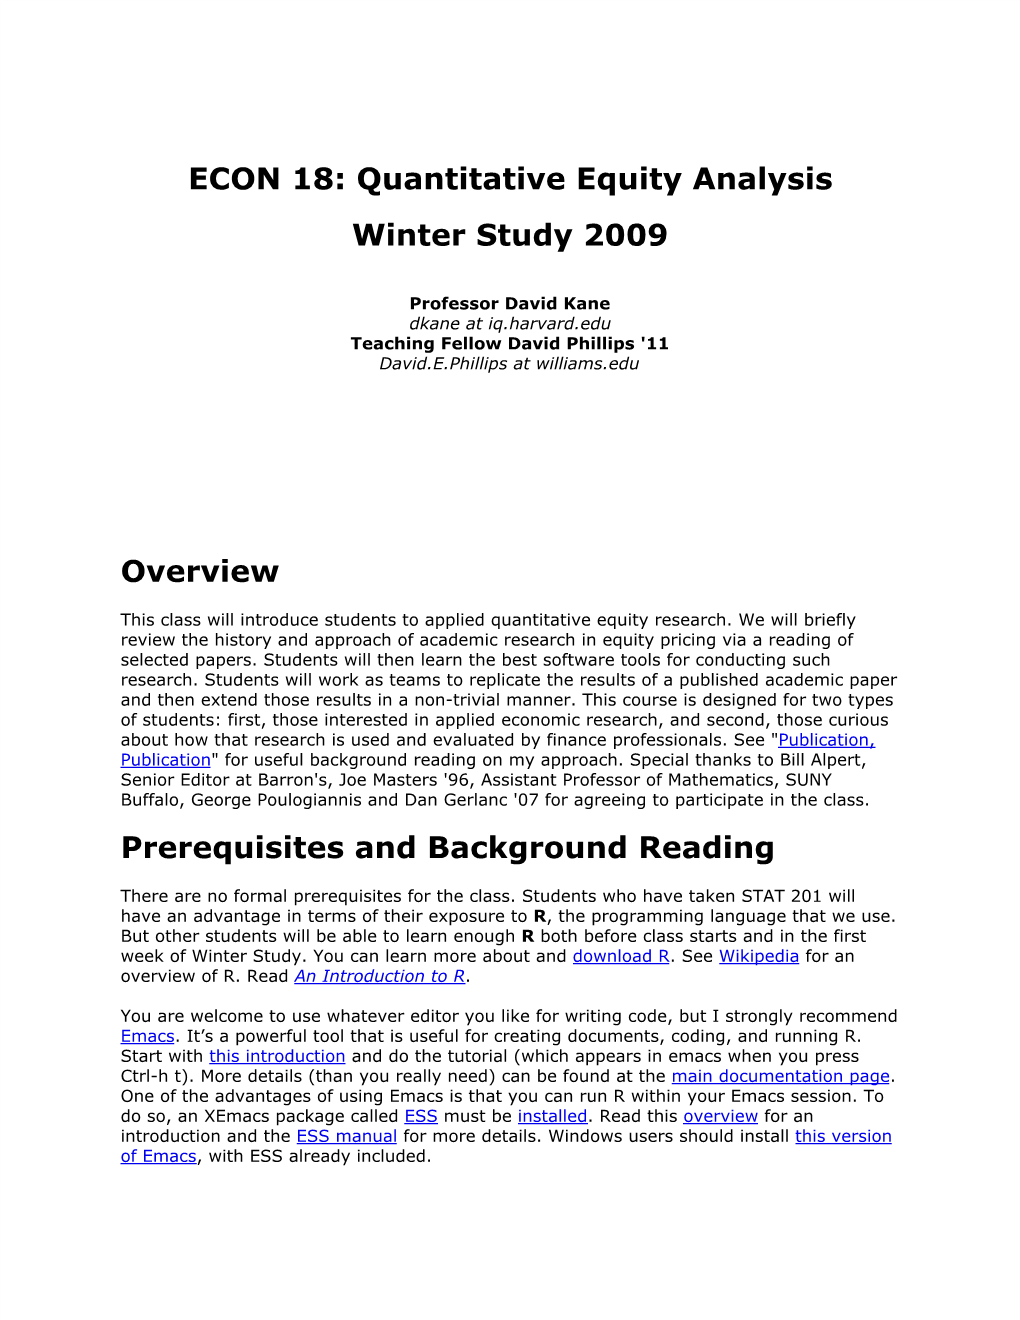 ECON 18: Quantitative Equity Analysis Winter Study 2009